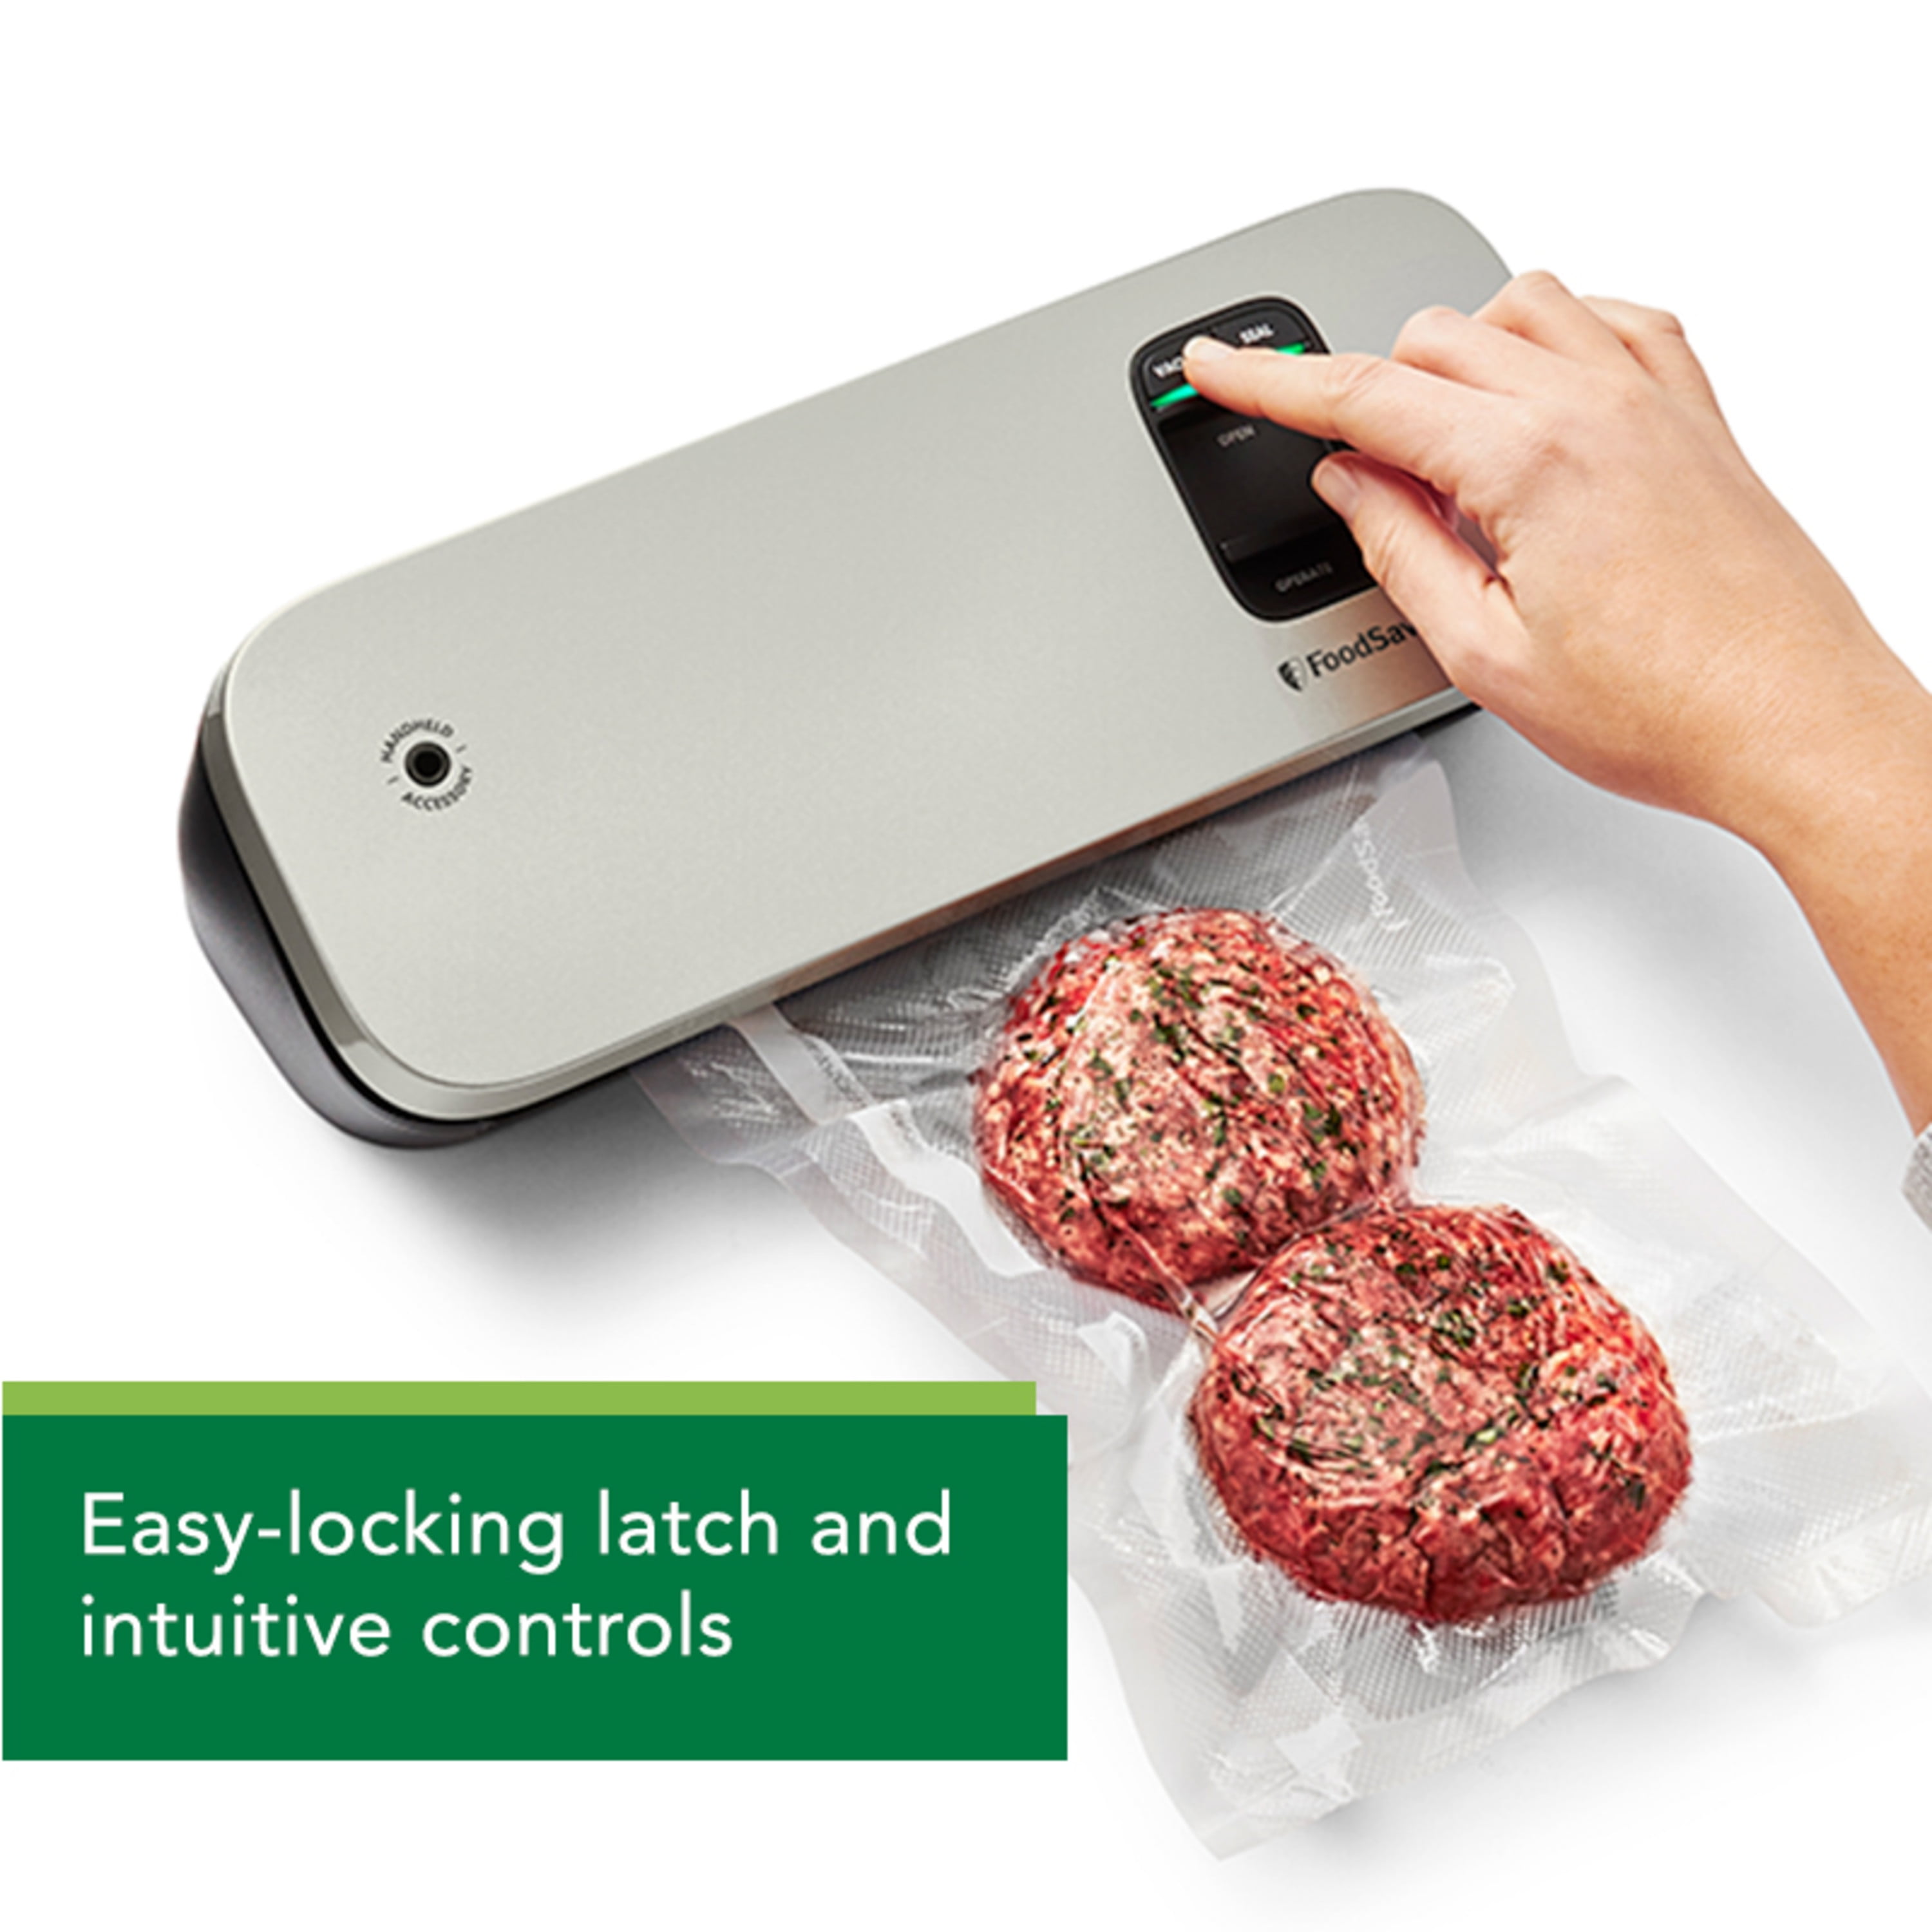 FoodSaver® Compact Food Vacuum Sealer, No Size - Harris Teeter